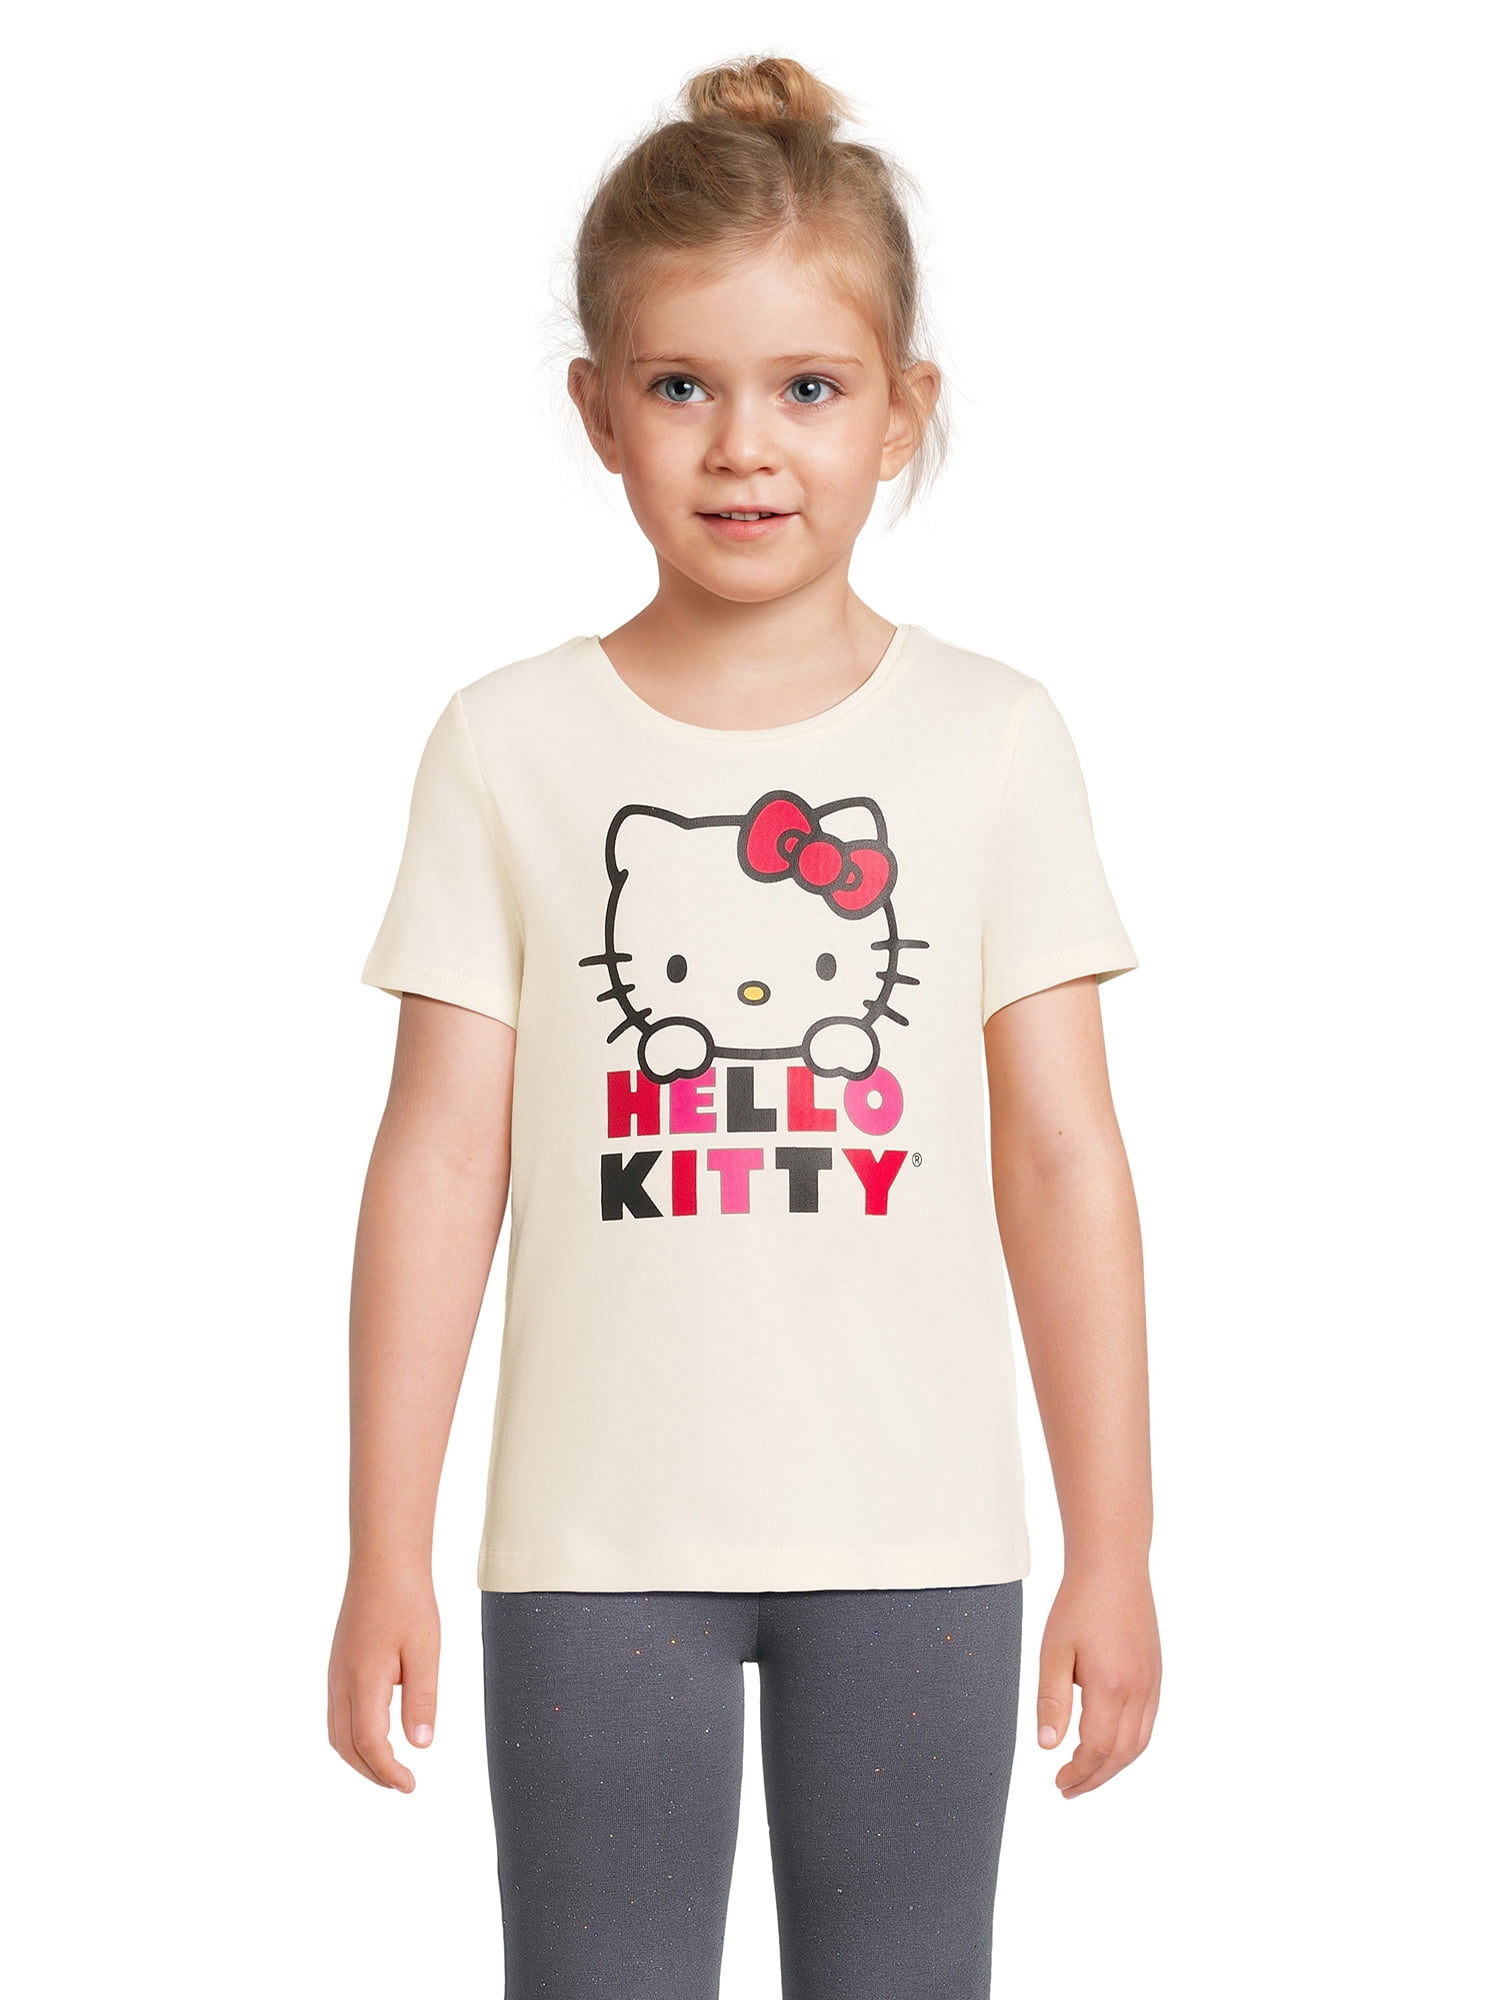 365 Kids by Garanimals Girls Short Sleeve Hello Kitty T-Shirt, Sizes 4 ...